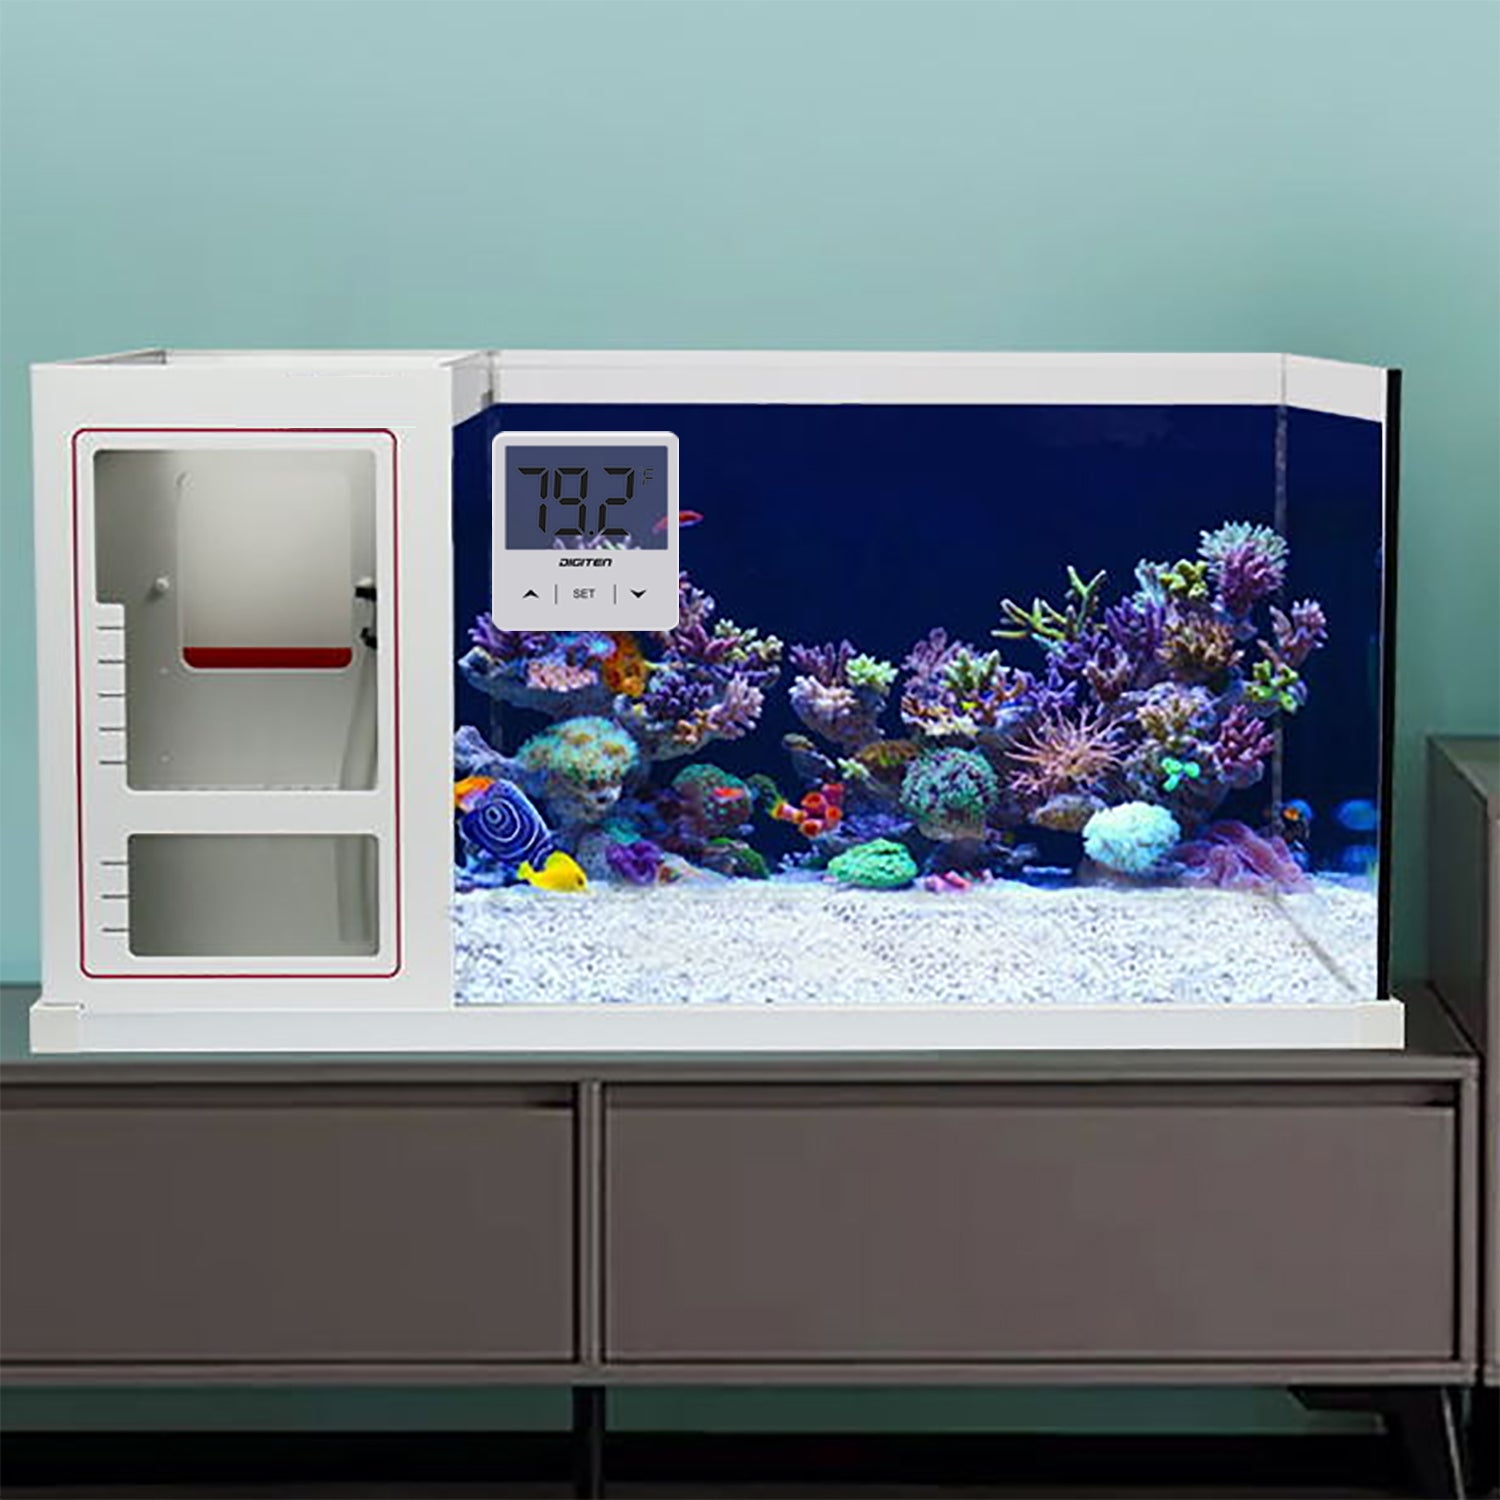 DIGITEN Aquarium Thermometer Digital Fish Tank Thermometer with